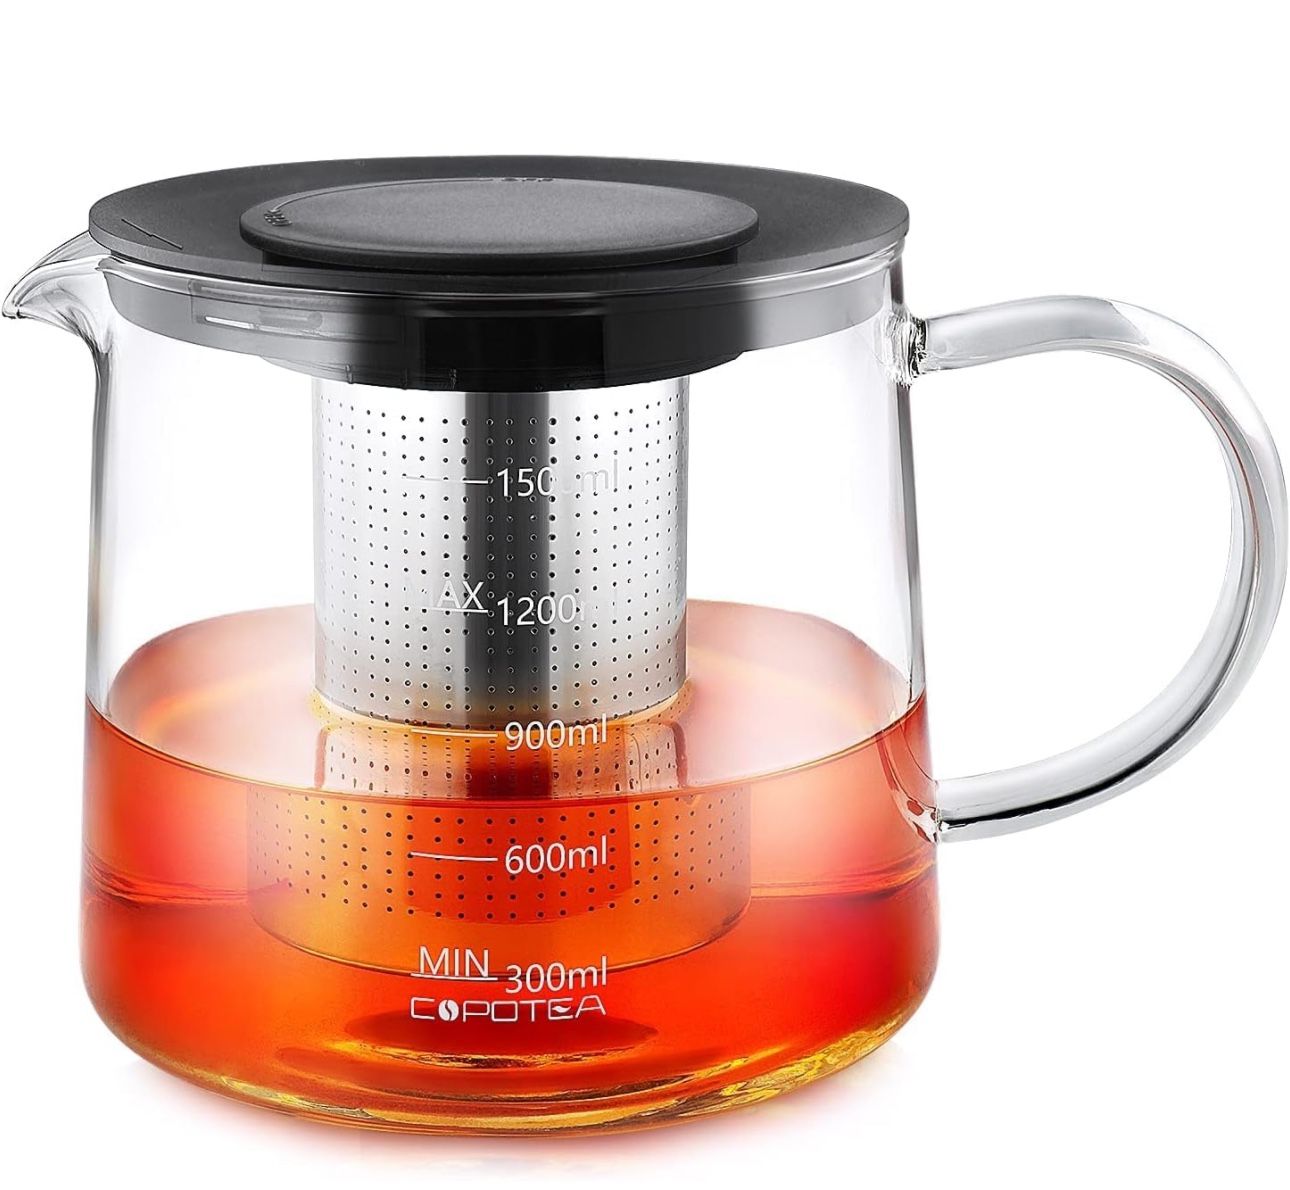 Glass Teapot with Infuser - 1500ml/50 OZ Tea Kettle Stovetop Safe Tea Pot for Blooming Tea Loose Leaf Tea, Premium Tea Maker with Gift Box